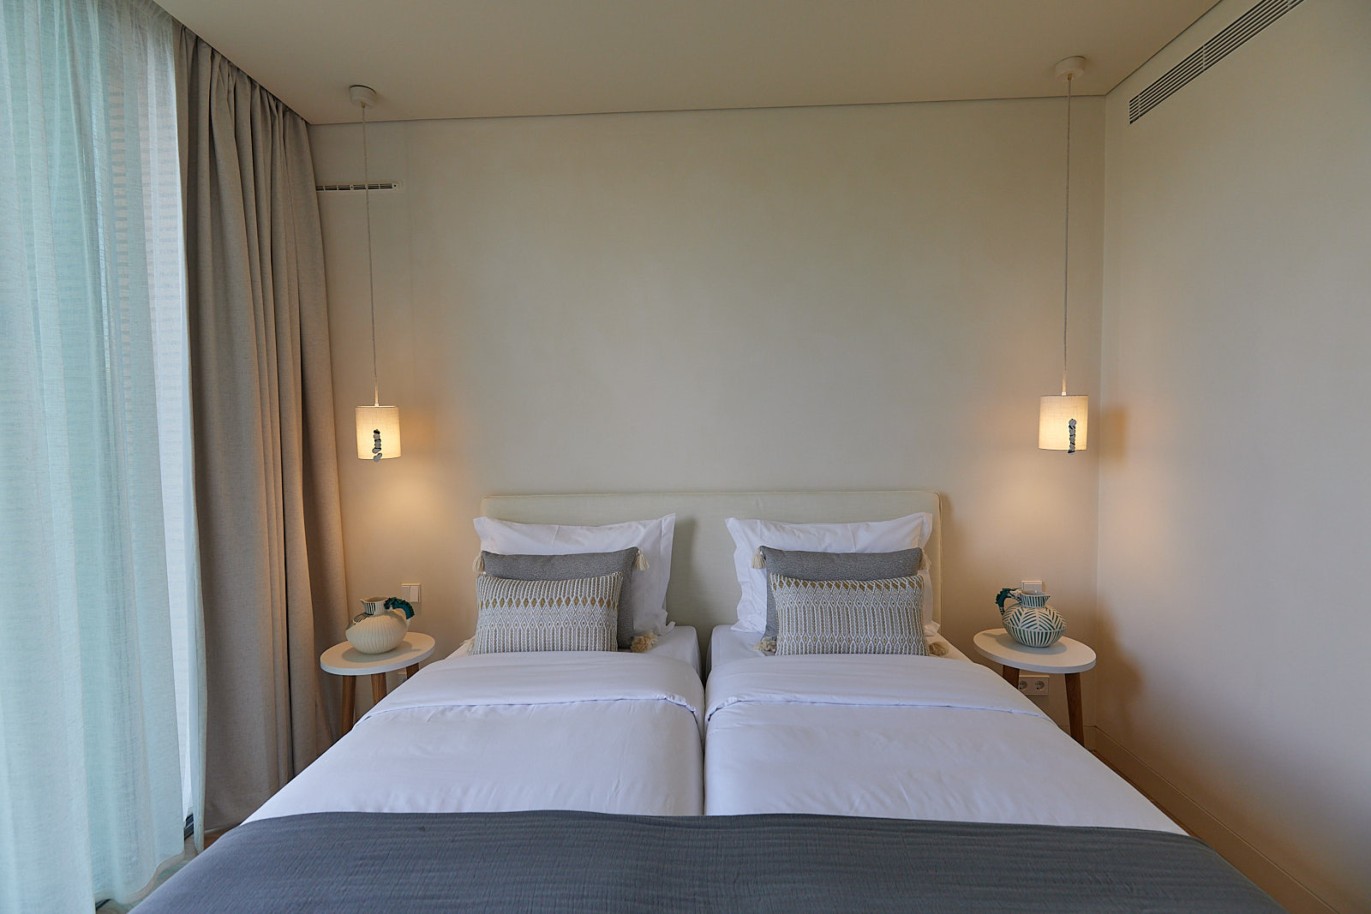 2 bedroom apartment in resort, for sale in Porches, Algarve_228946